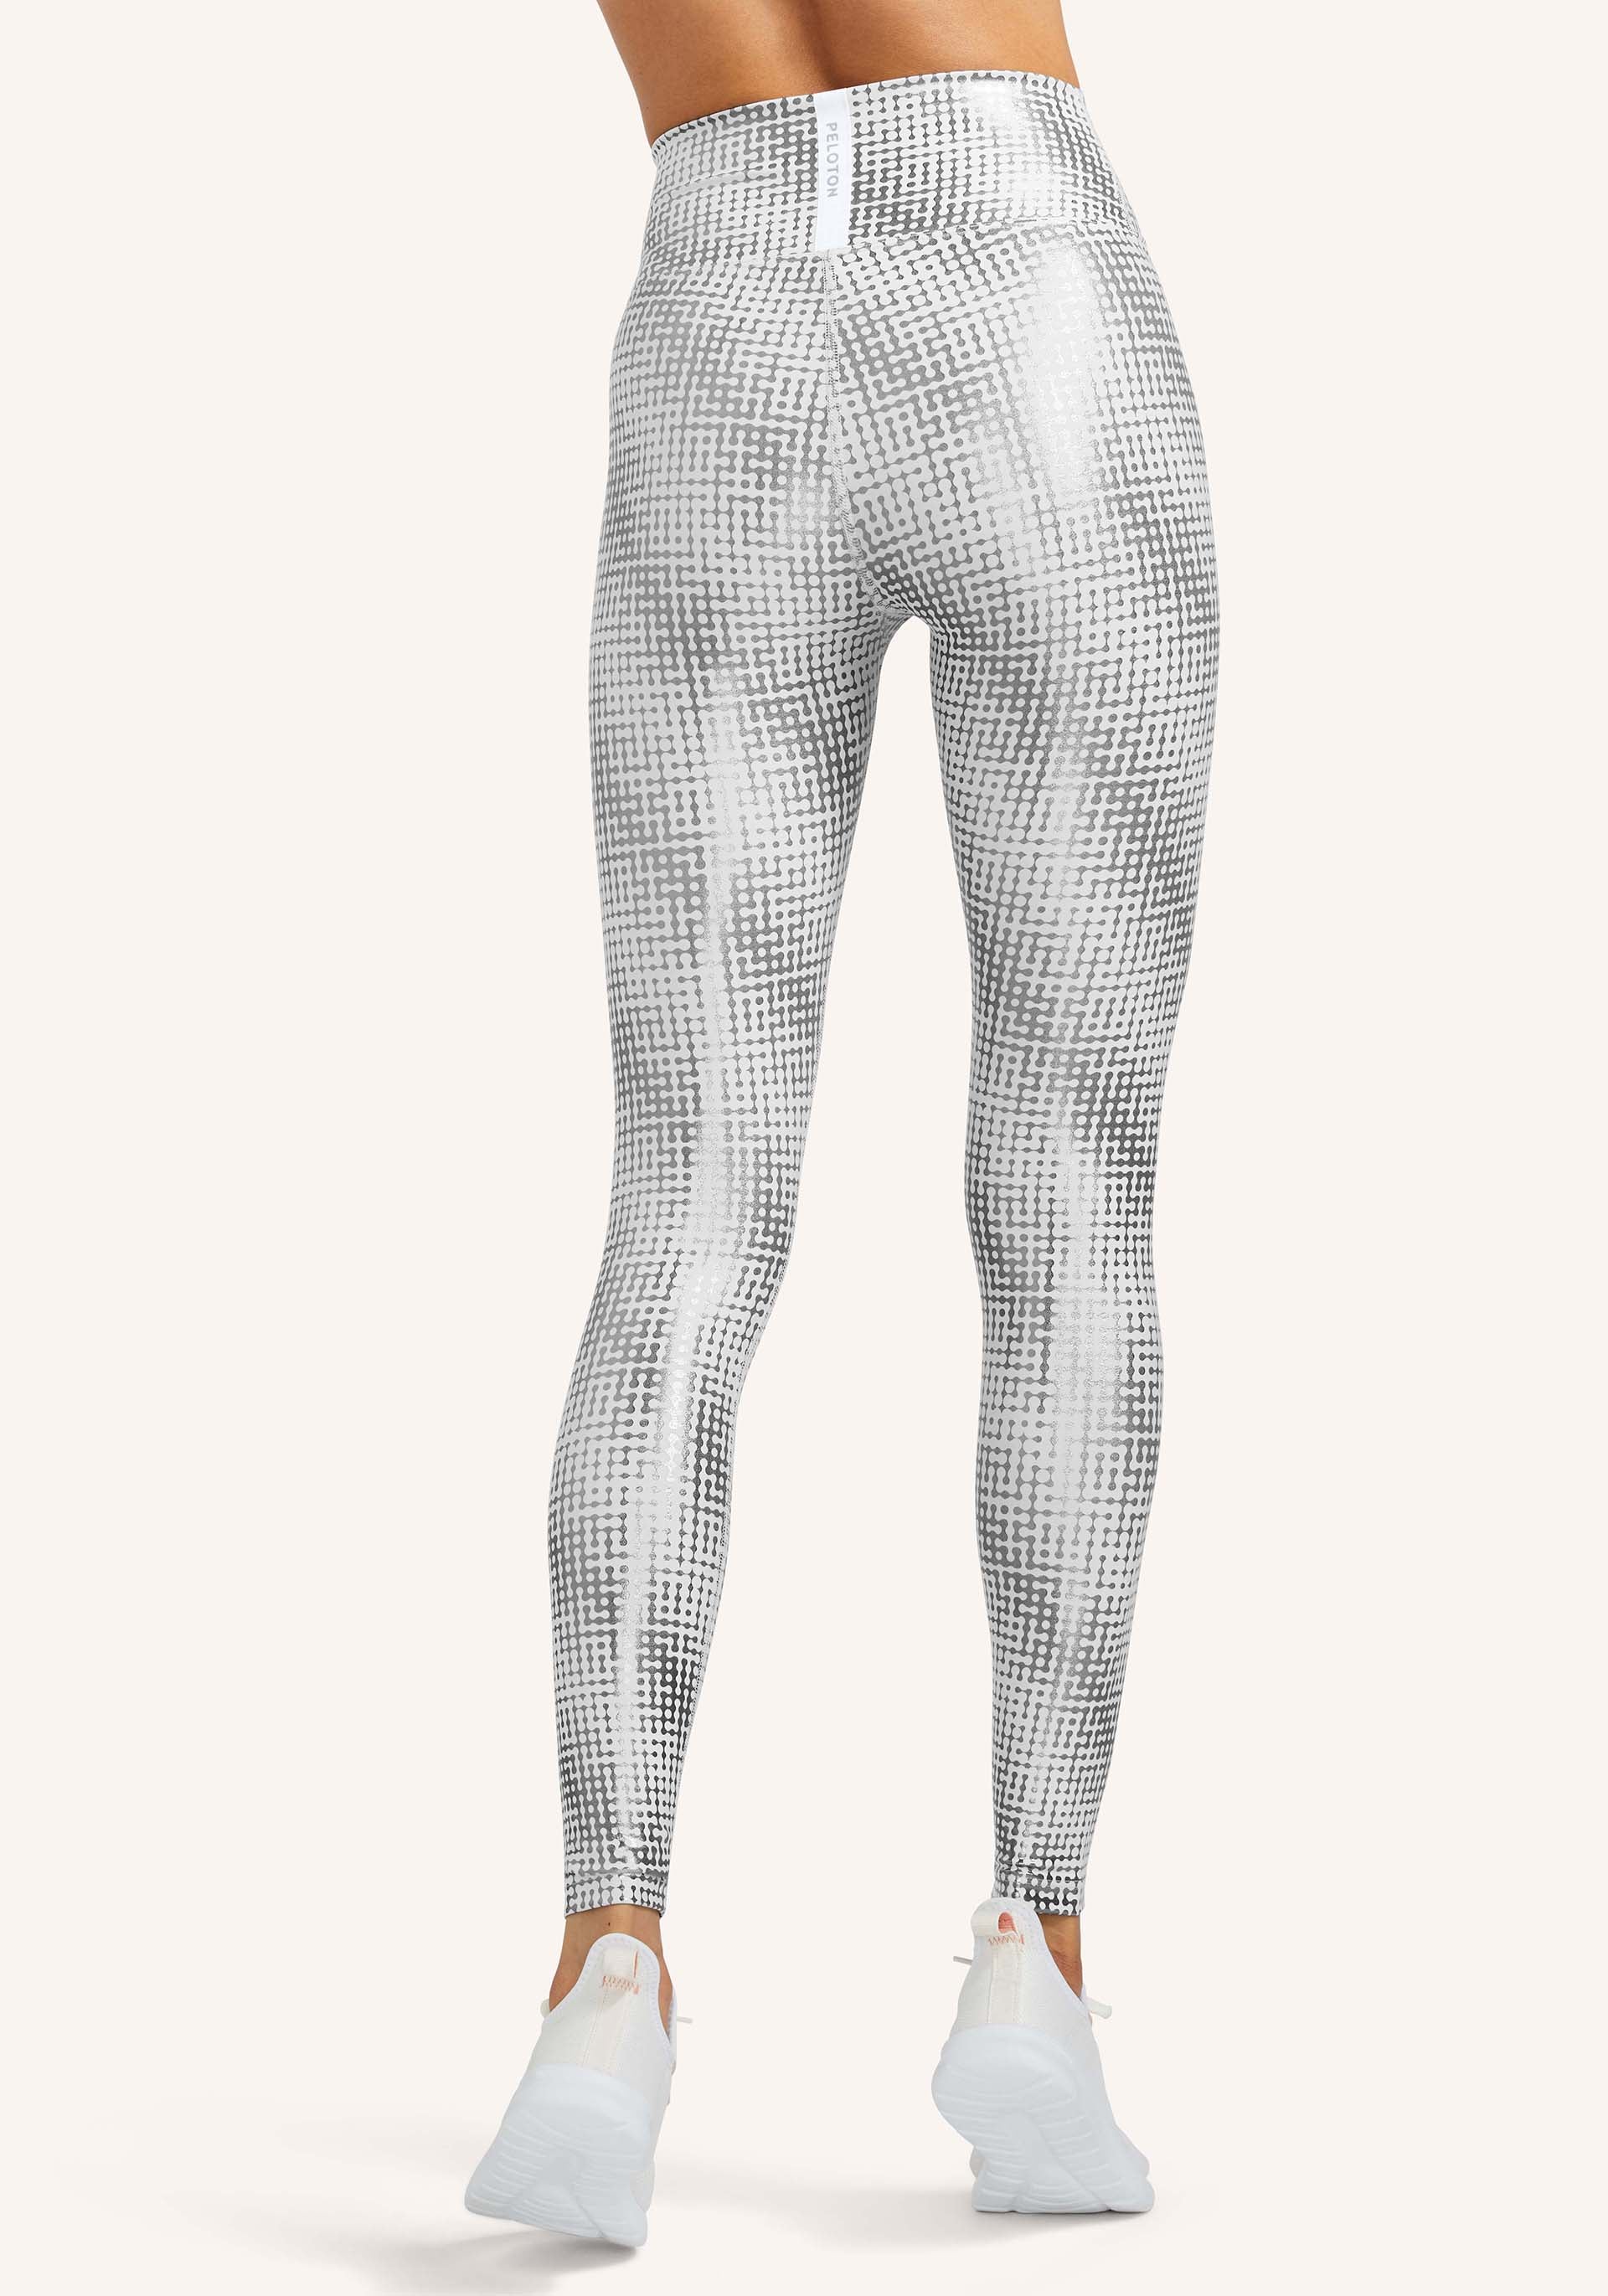 Peloton women's show up front slit gray leggings sz XL originally